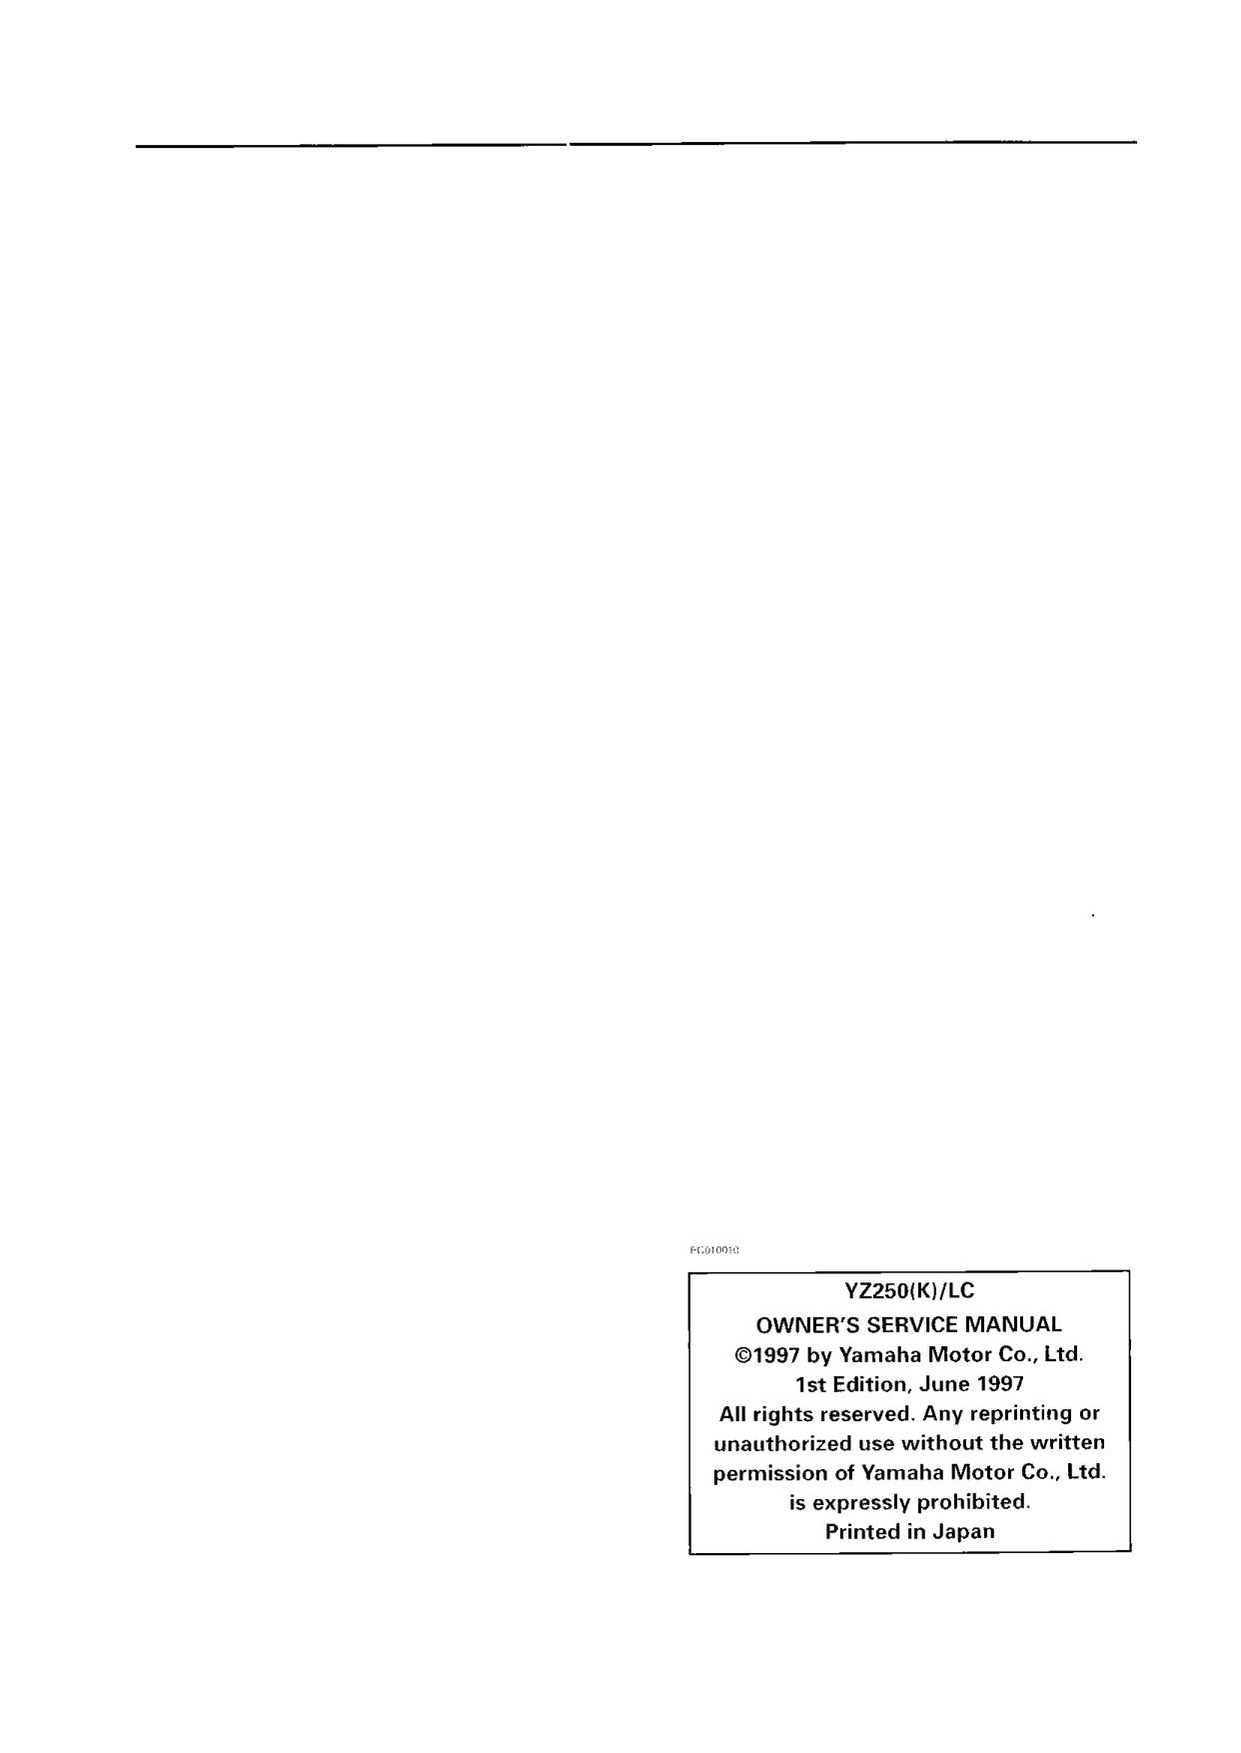 File:1998 Yamaha YZ250 KLC Owners Service Manual.pdf